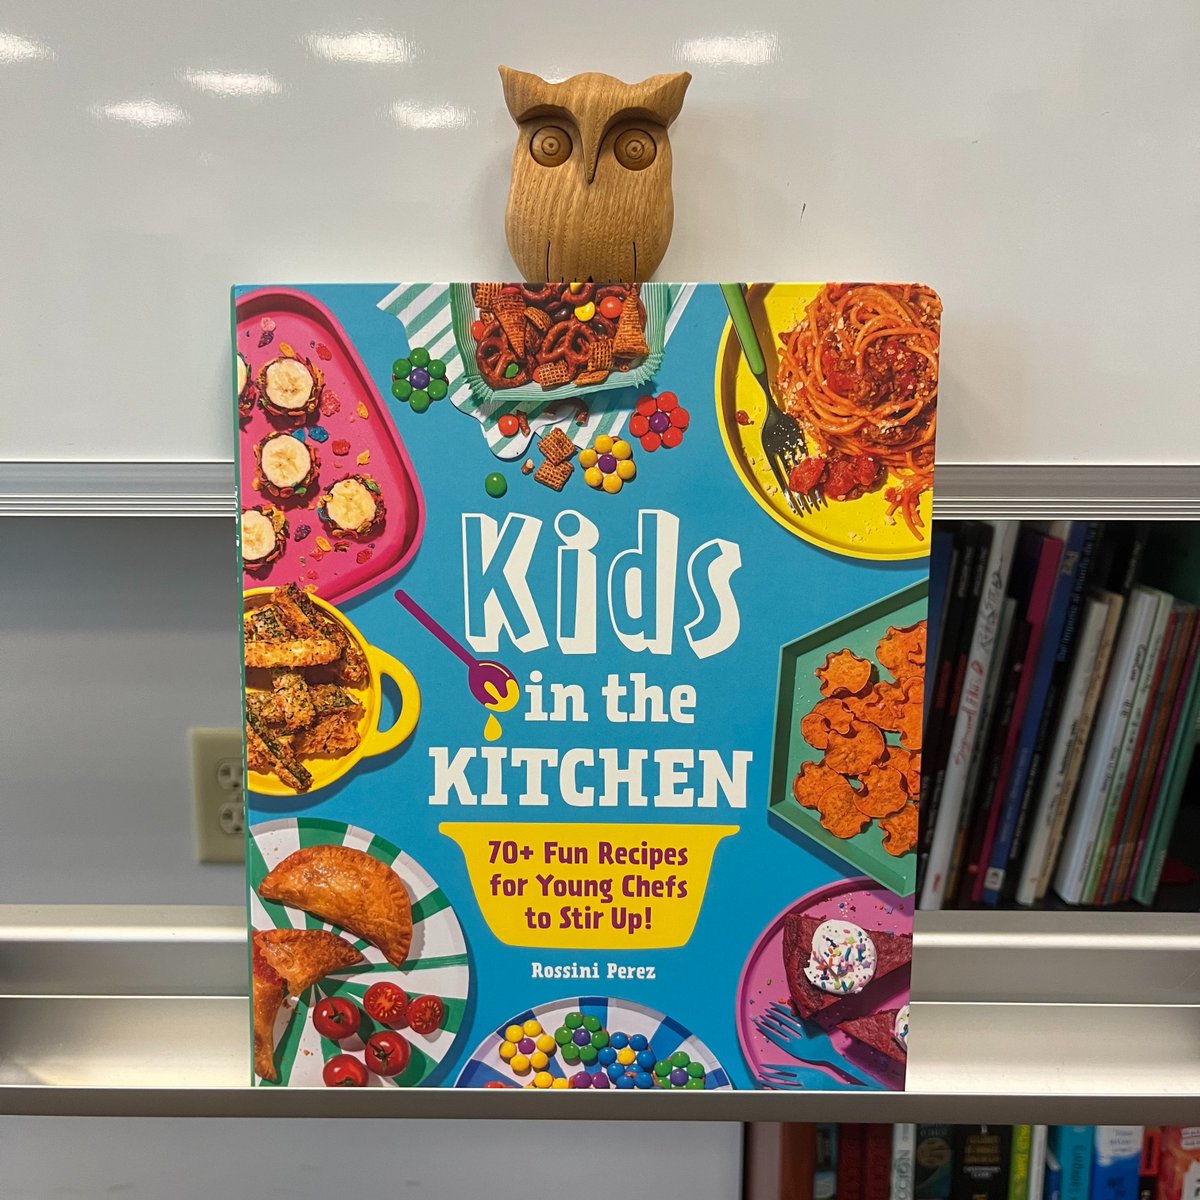 📚👩🏾‍🍳 Kids in the Kitchen: 70+ Fun Recipes for Young Chefs to Stir Up! by Rossini Perez. #dailybutlershelfie #WorldBakingDay #KidsintheKitchen #RossiniPerez @QuartoKids